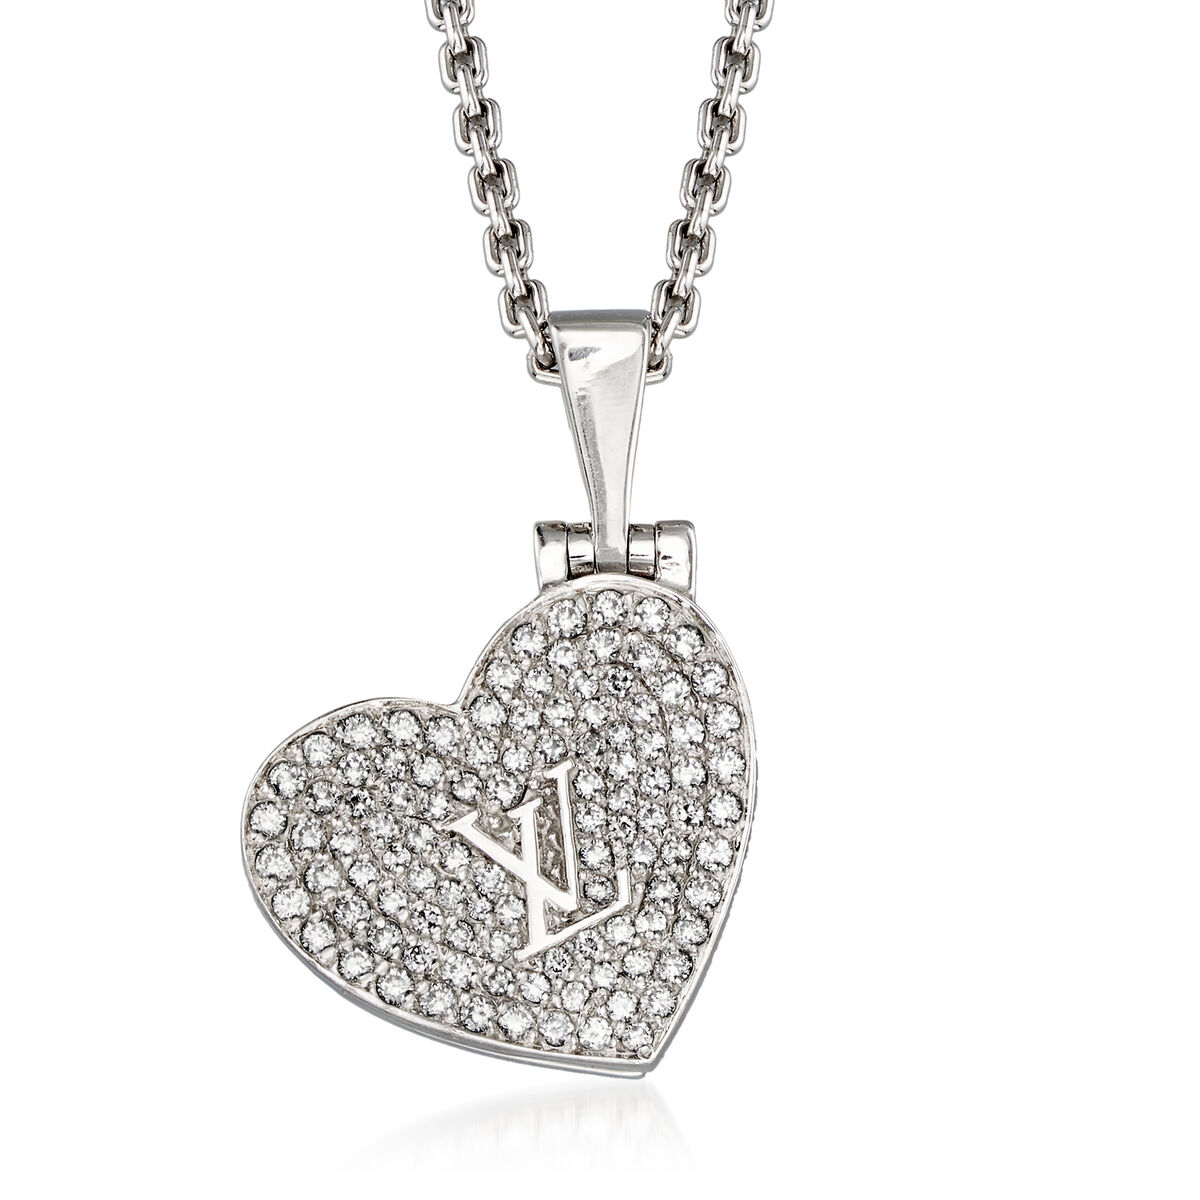 Louis Vuitton 2010s Pre-owned 18kt White Gold Diamond Pendant Necklace - Silver